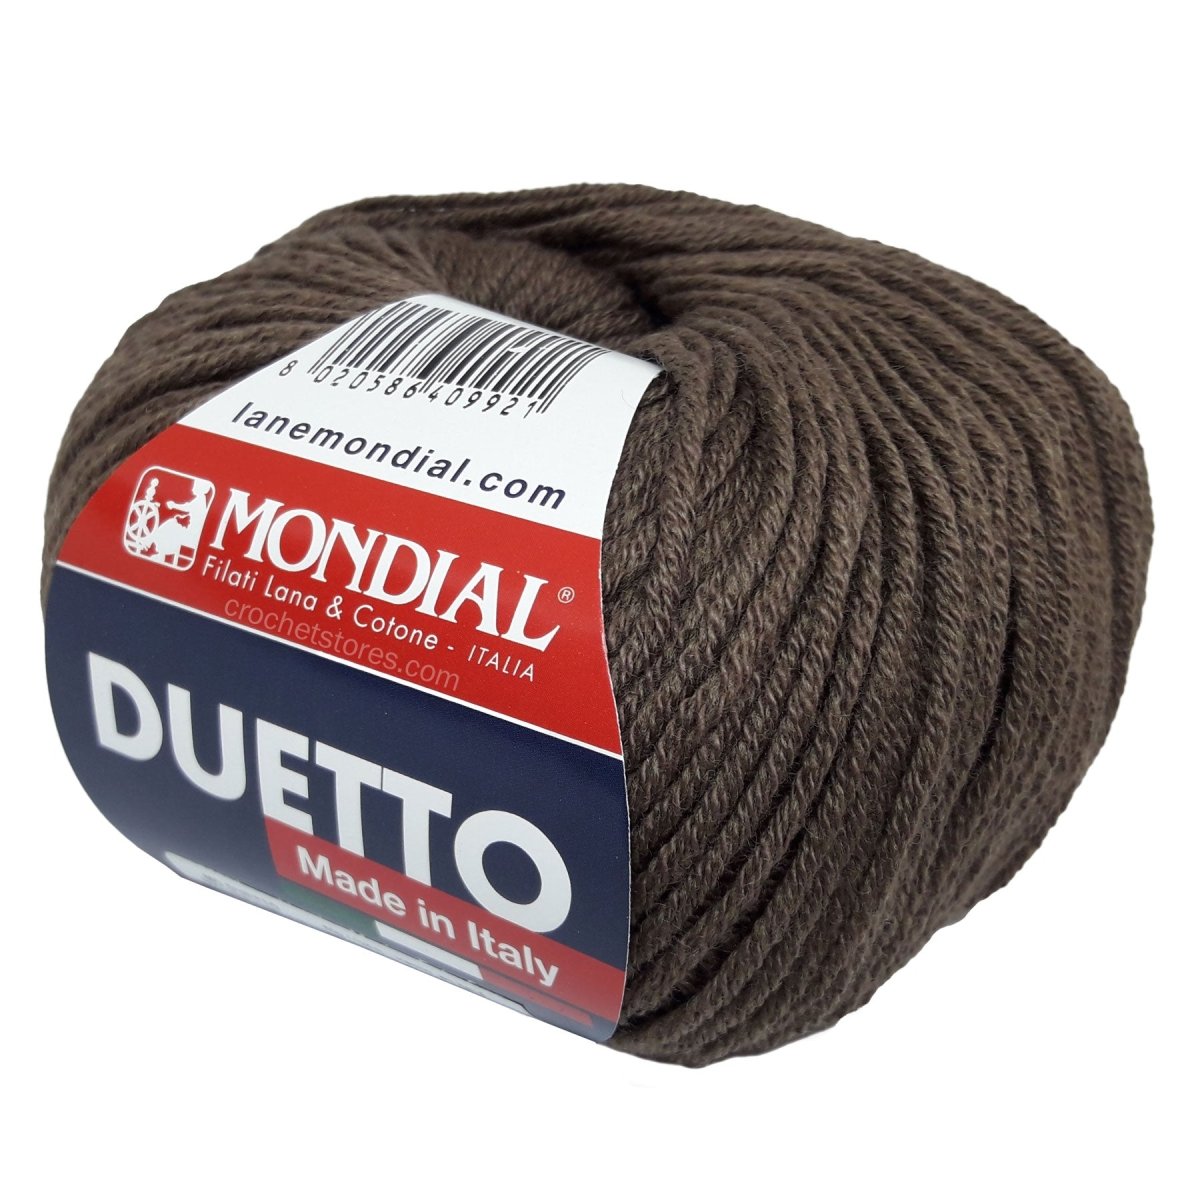 DUETTO - Crochetstores1175-2868020586409921